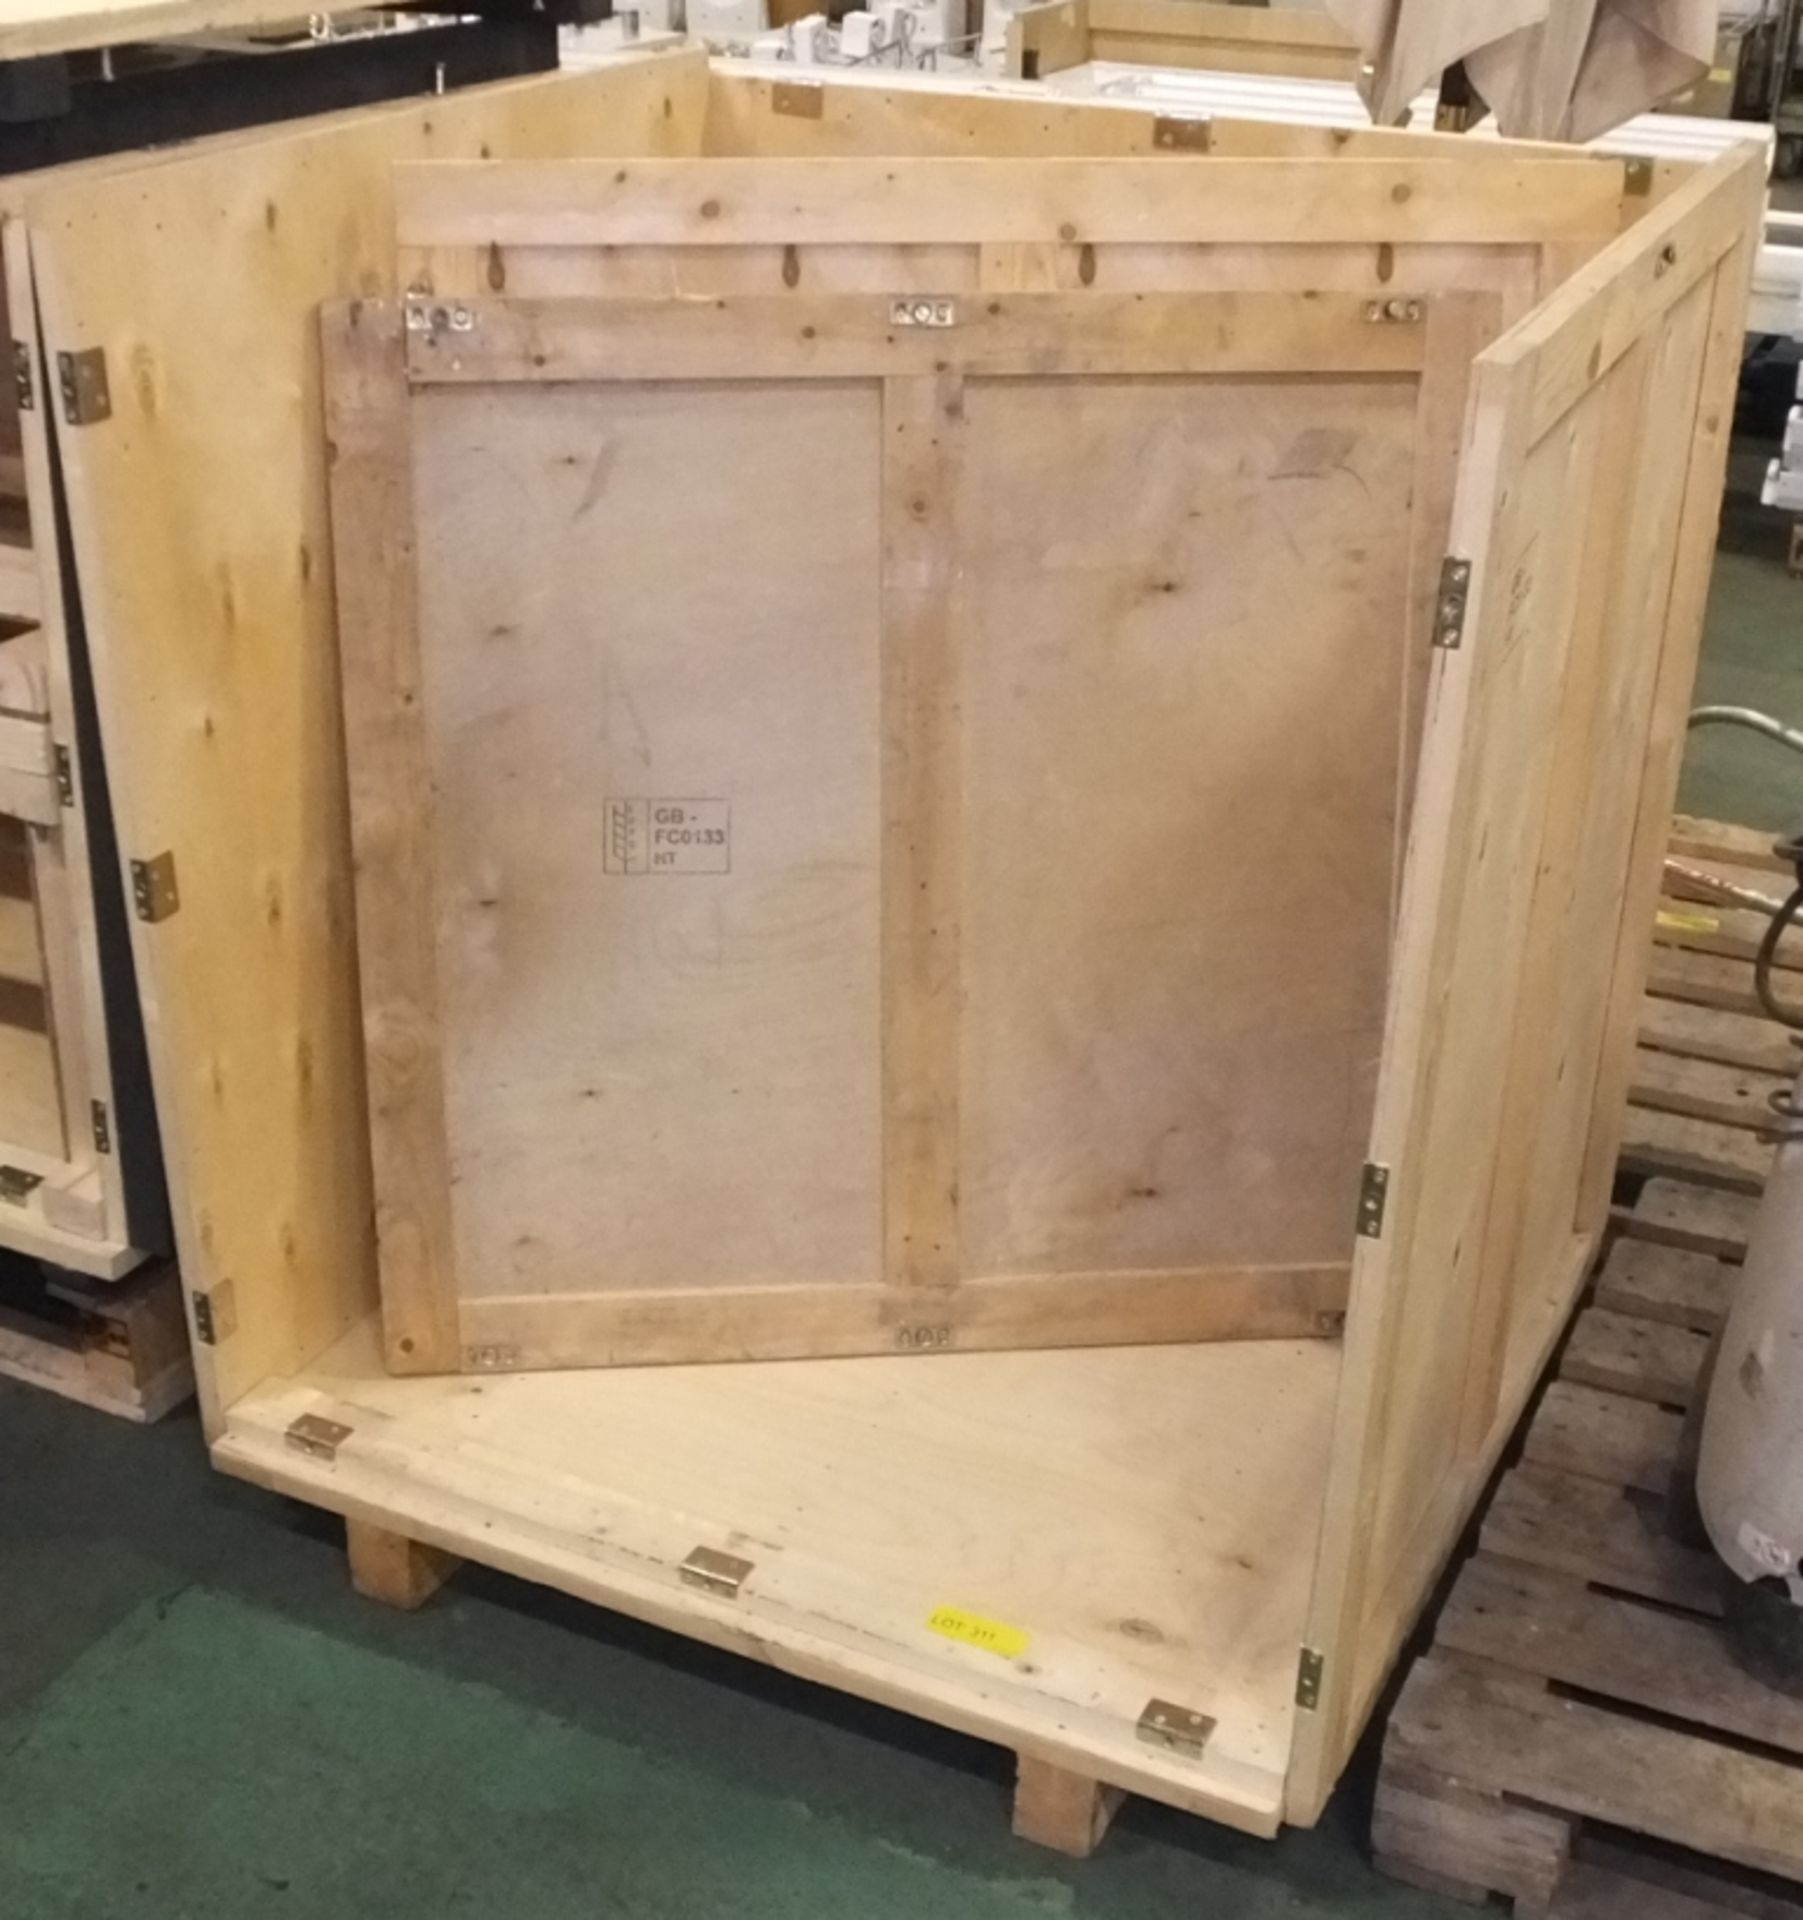 Heat treated wooden transit box